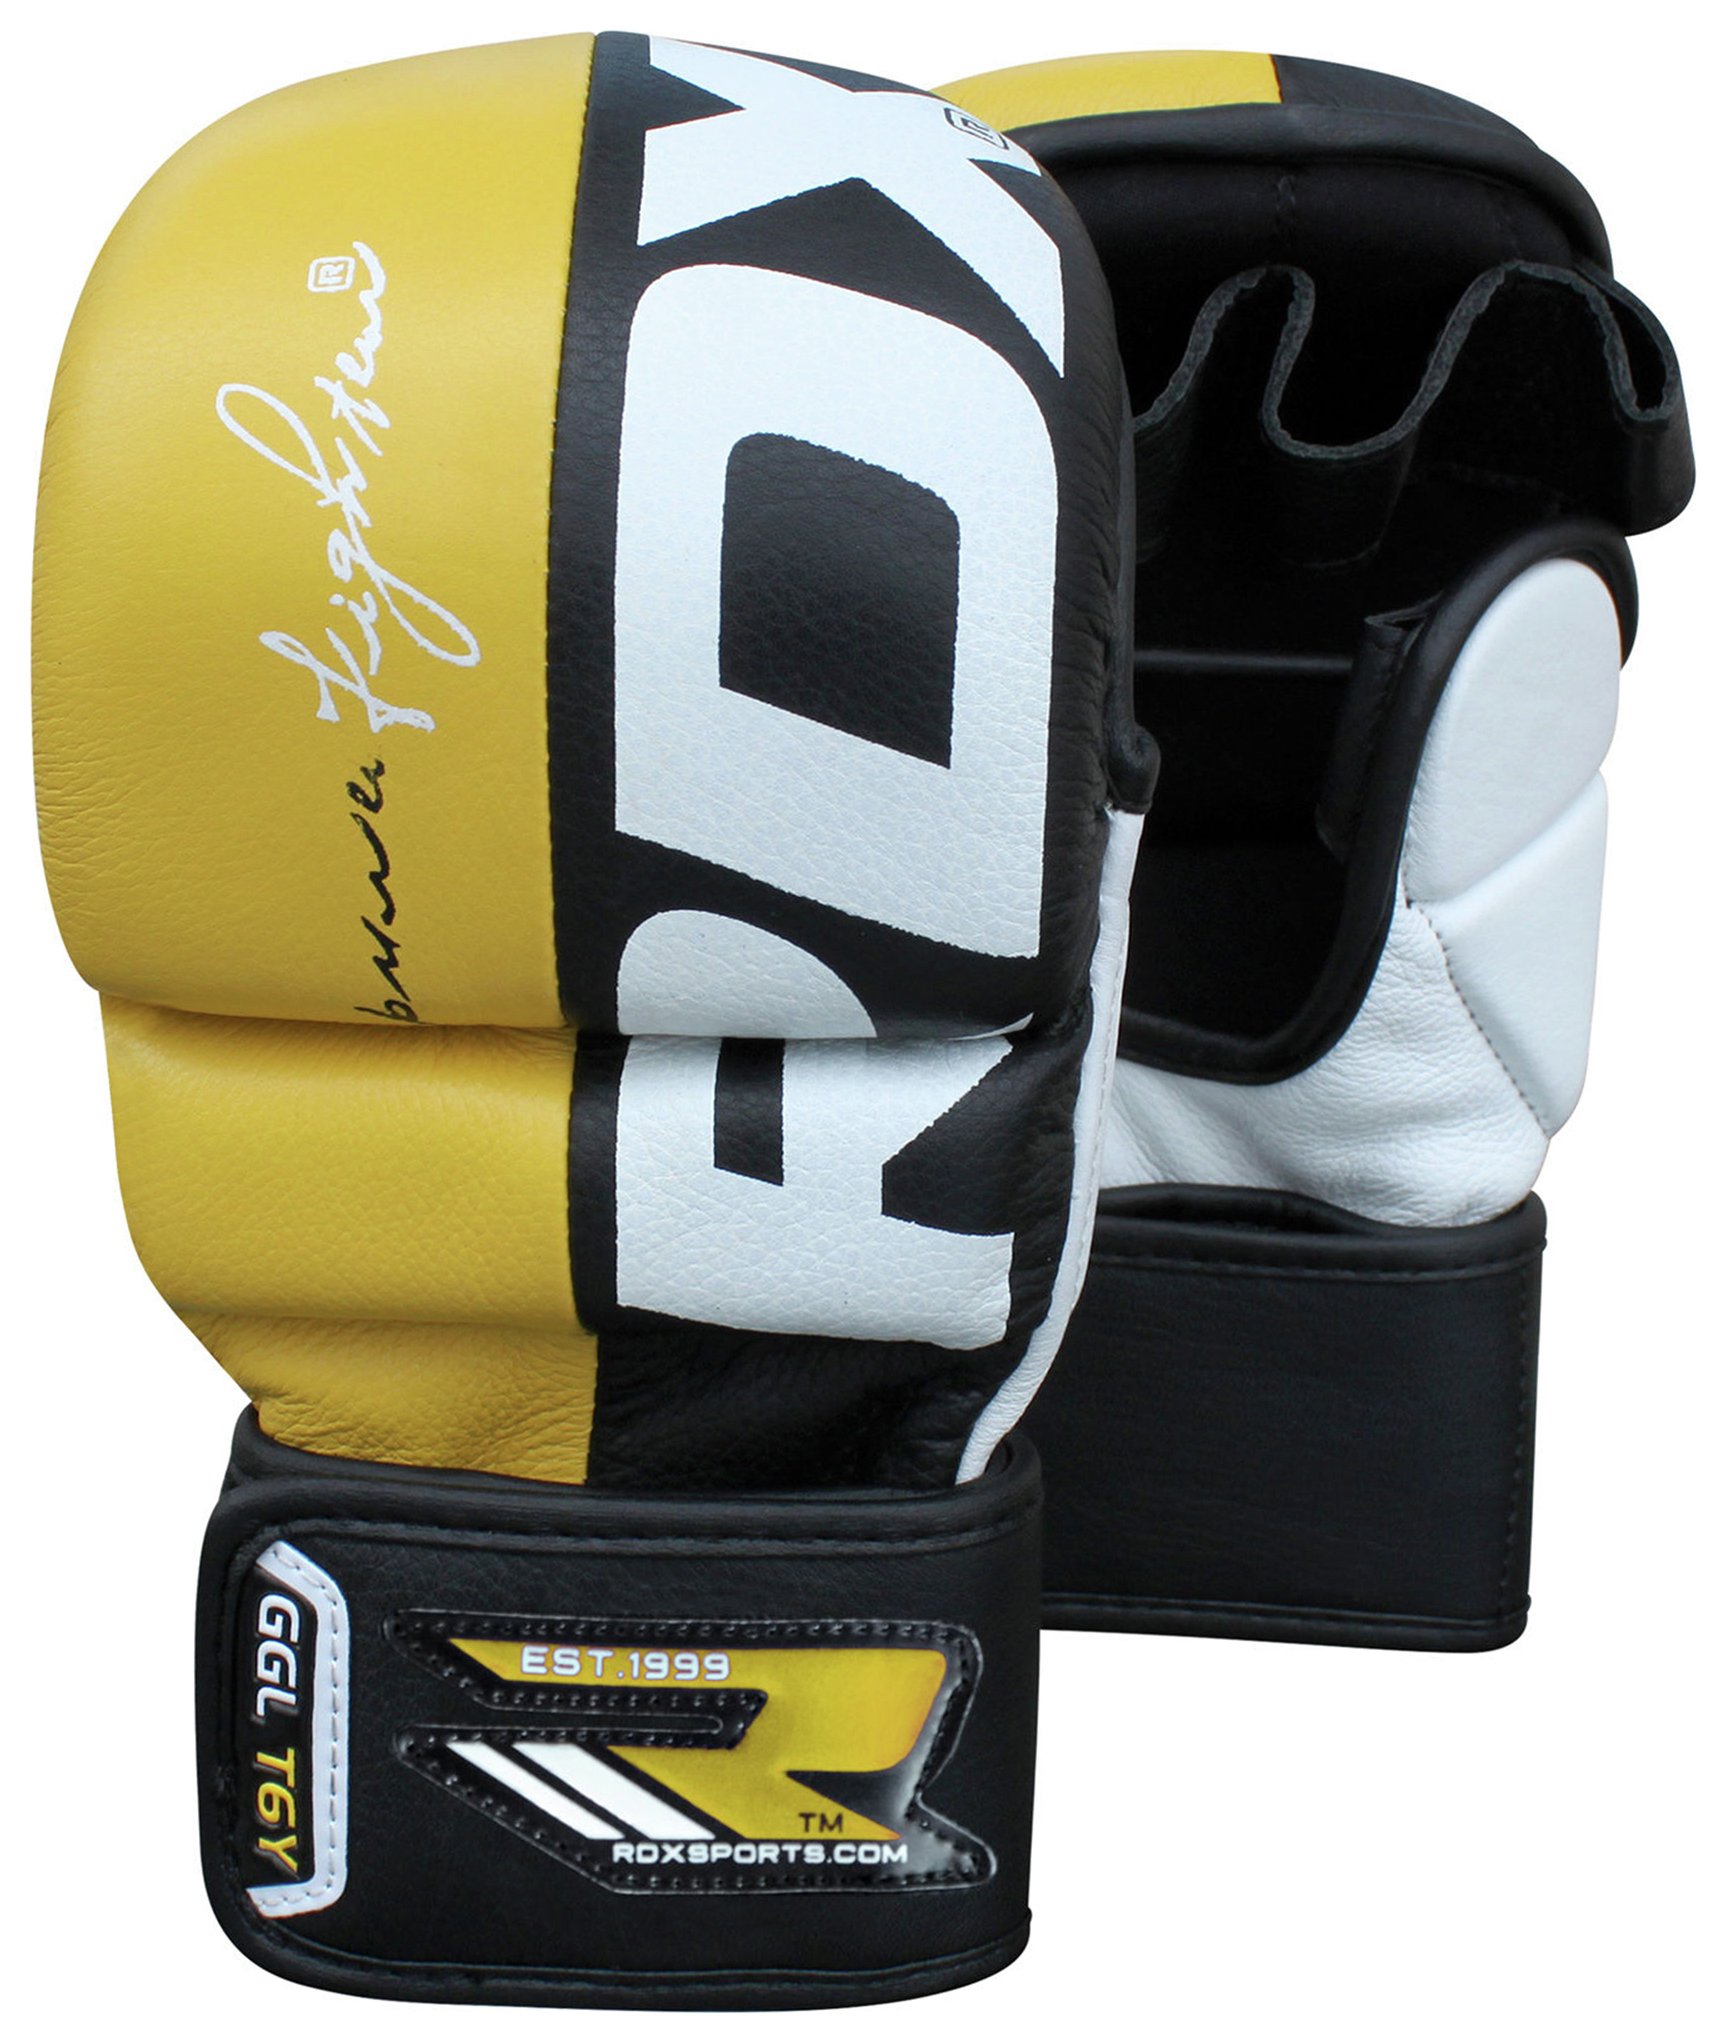 RDX Medium to Large Mixed Martial Arts Gloves - Yellow.